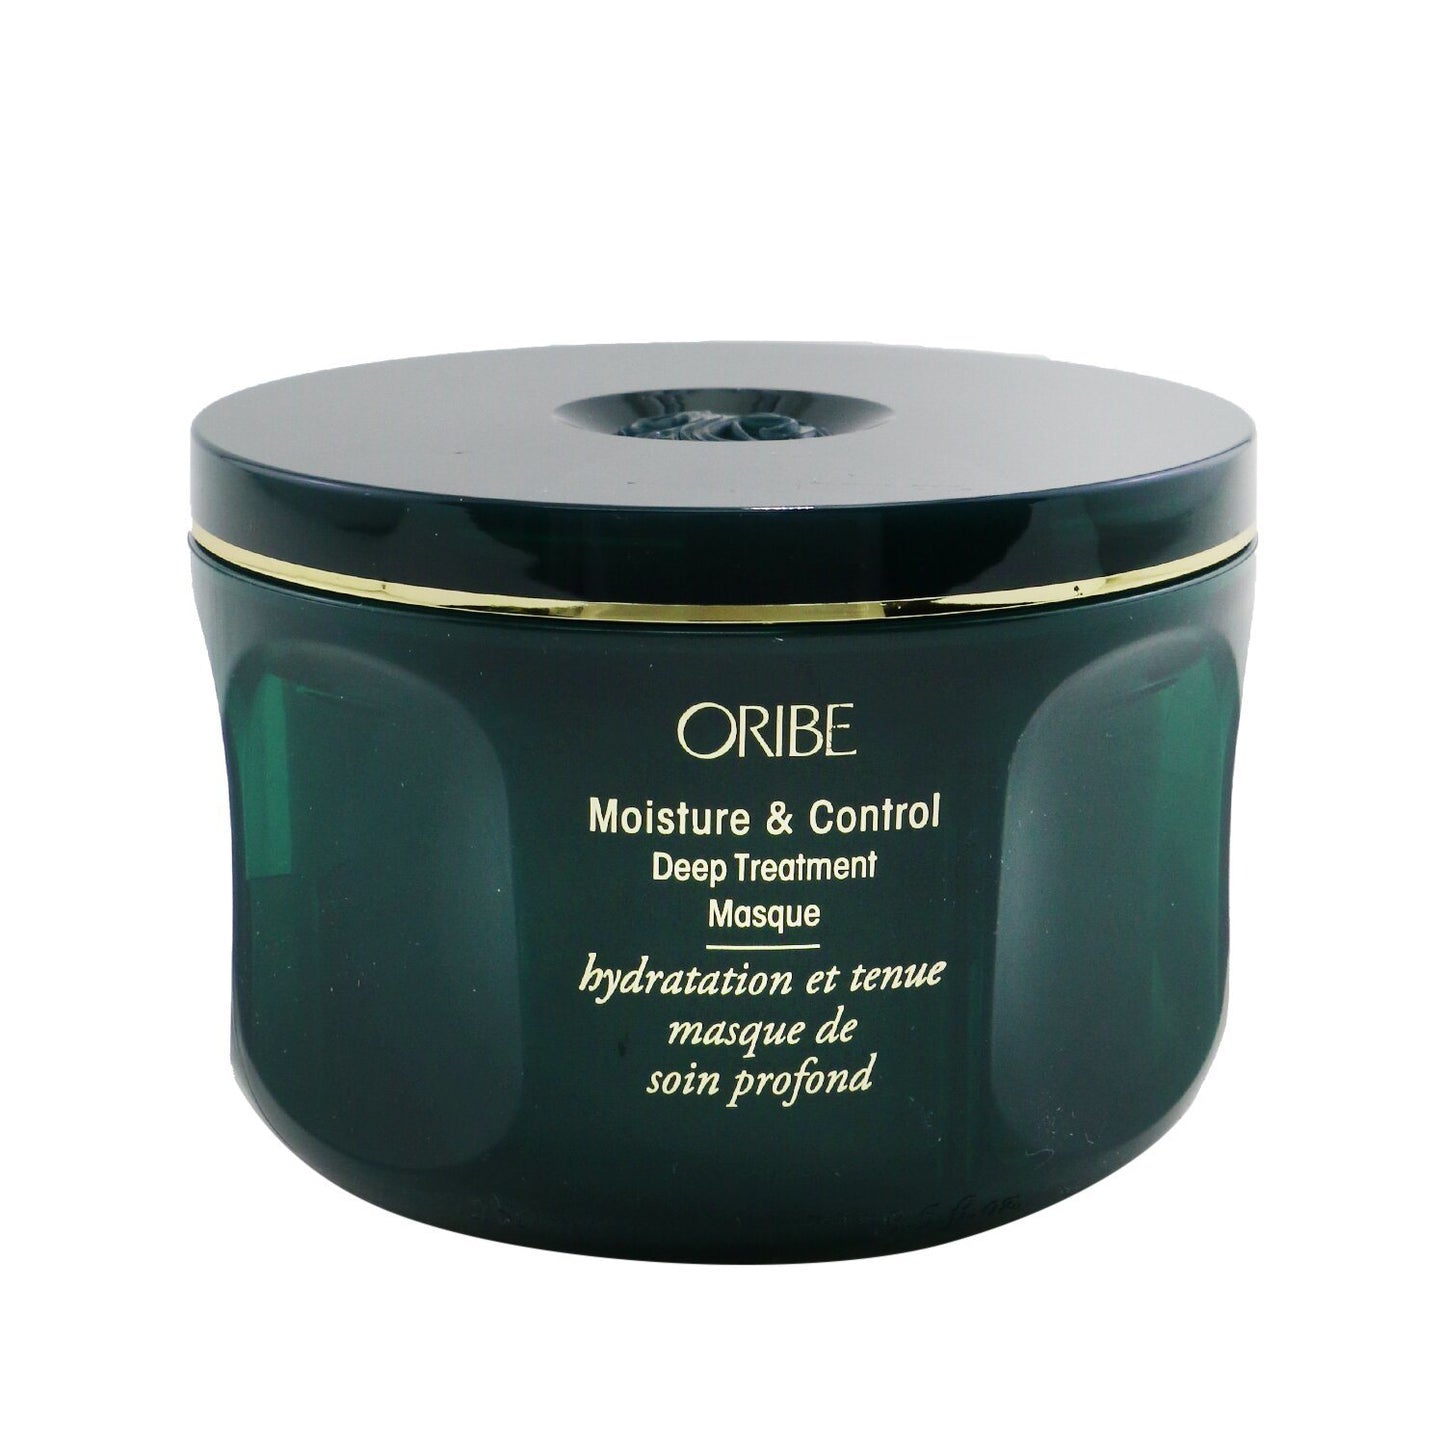 ORIBE - Moisture & Control Deep Treatment Masque 400736AS / 017975 250ml/8.5oz